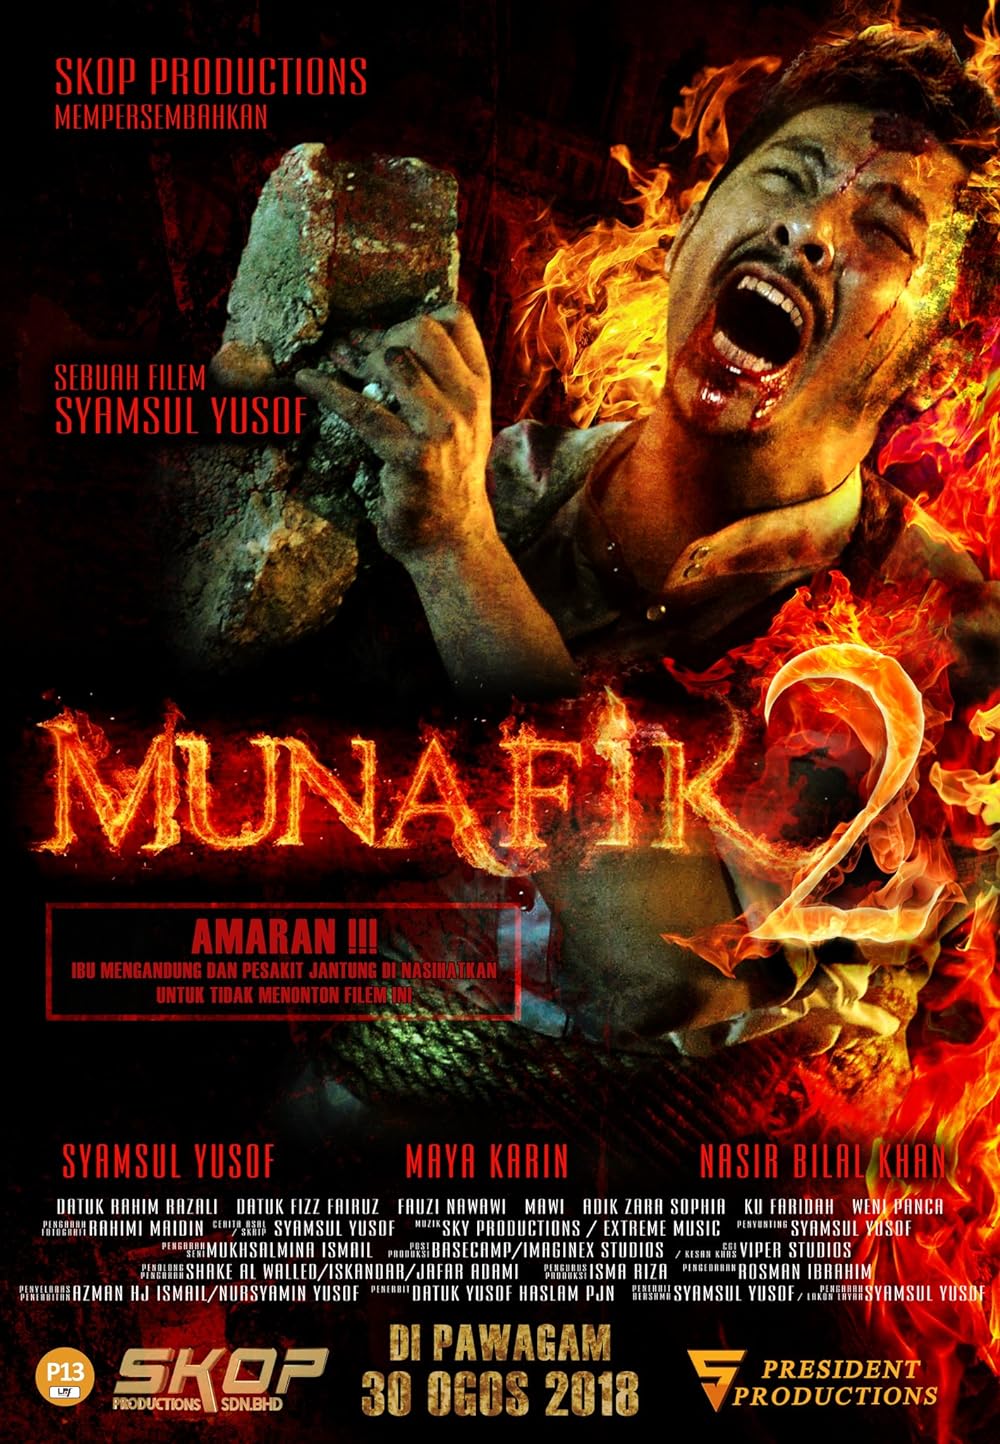 FULL MOVIE: Munafik 2 (2018)